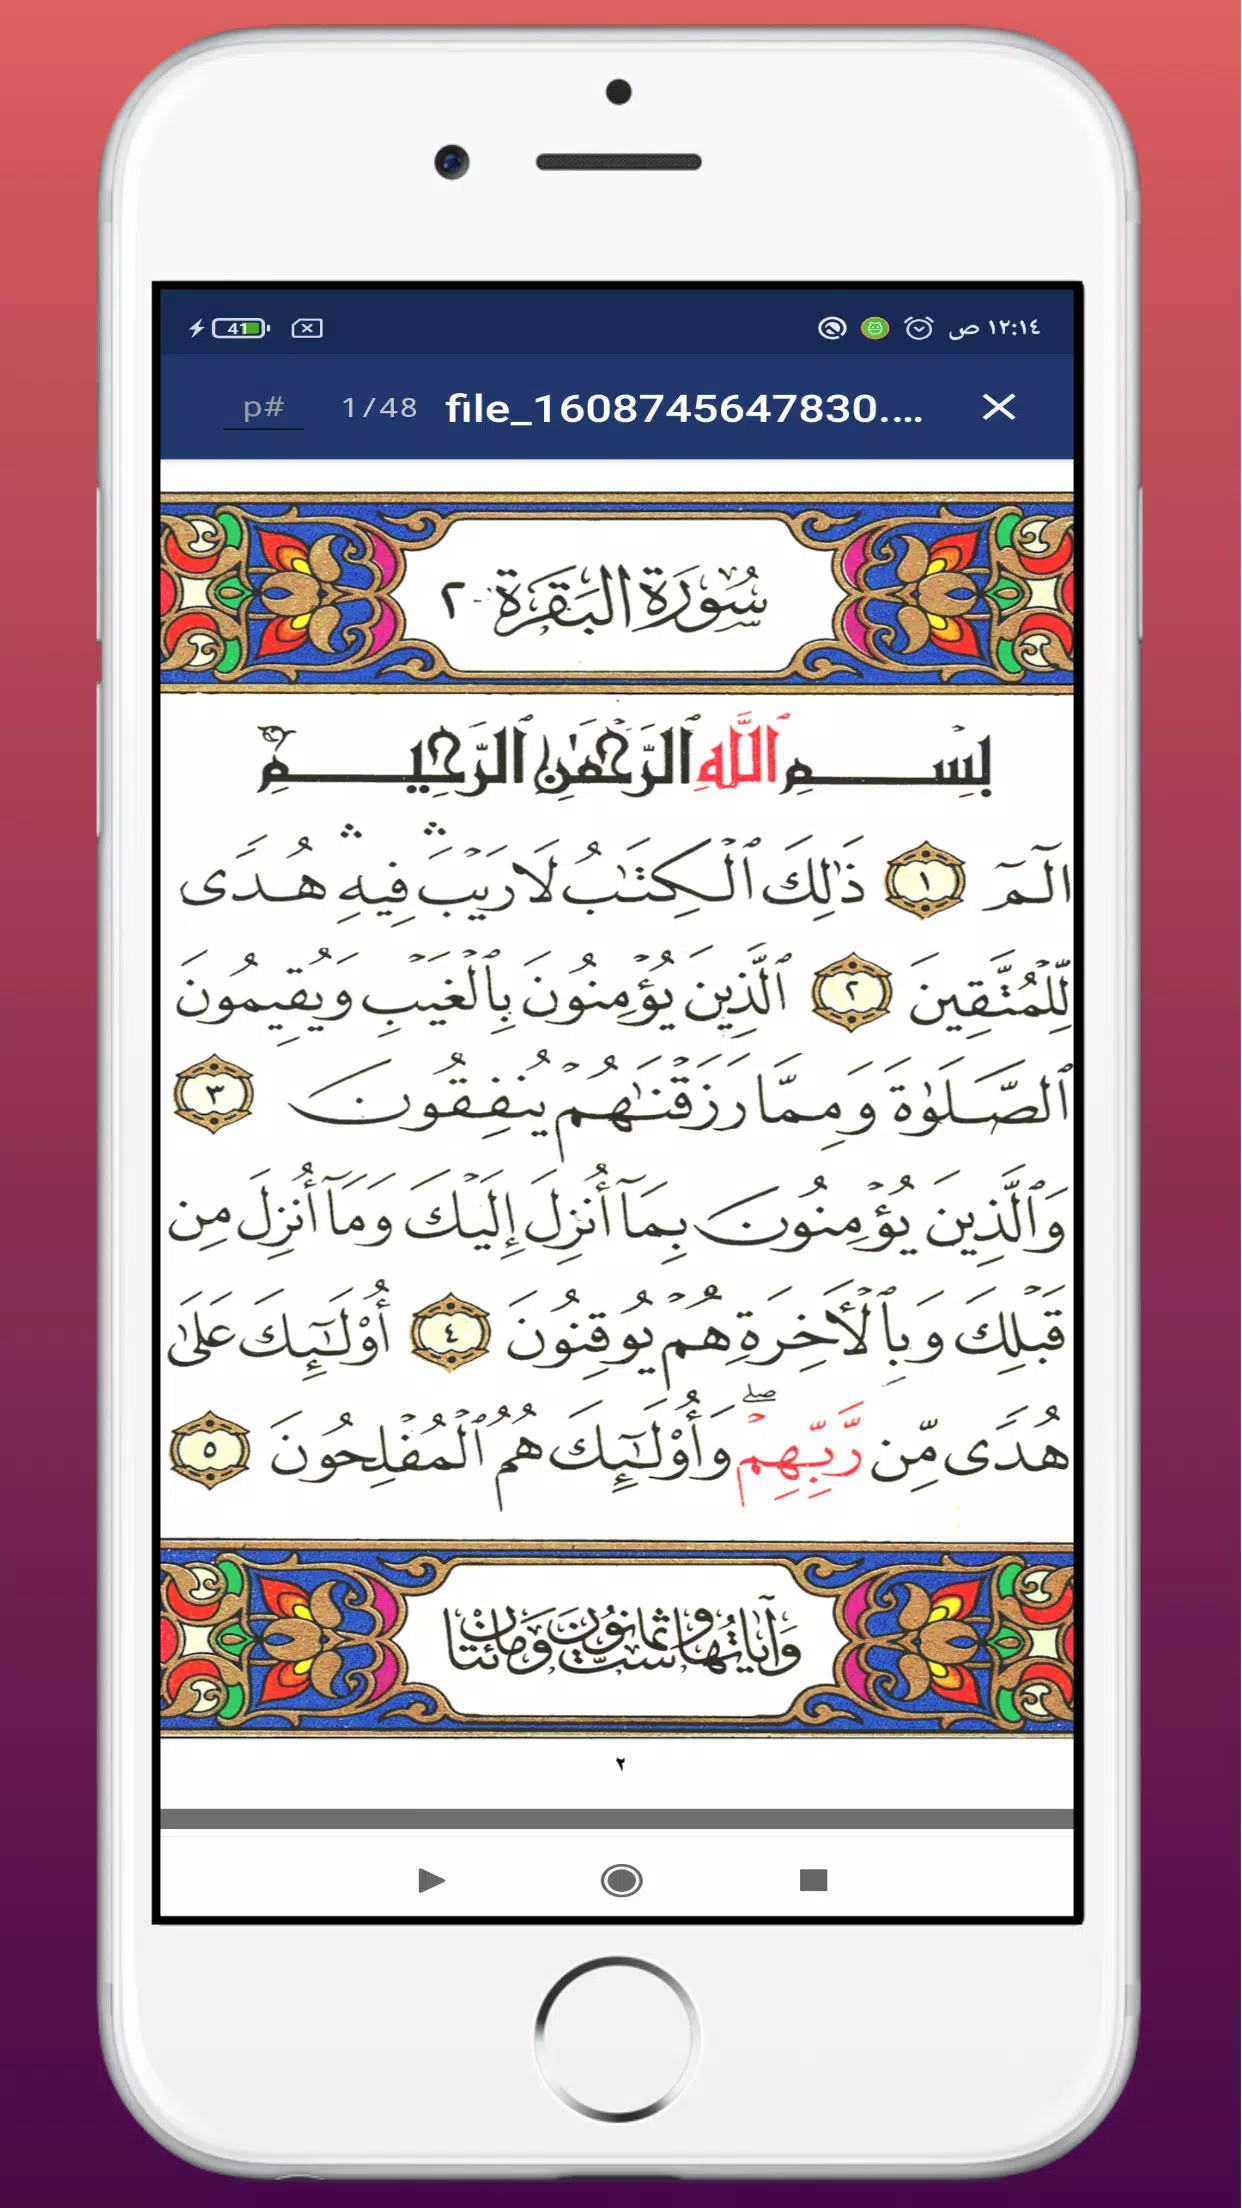 Surah Al-Baqarah pdf / Mp3 APK for Android Download